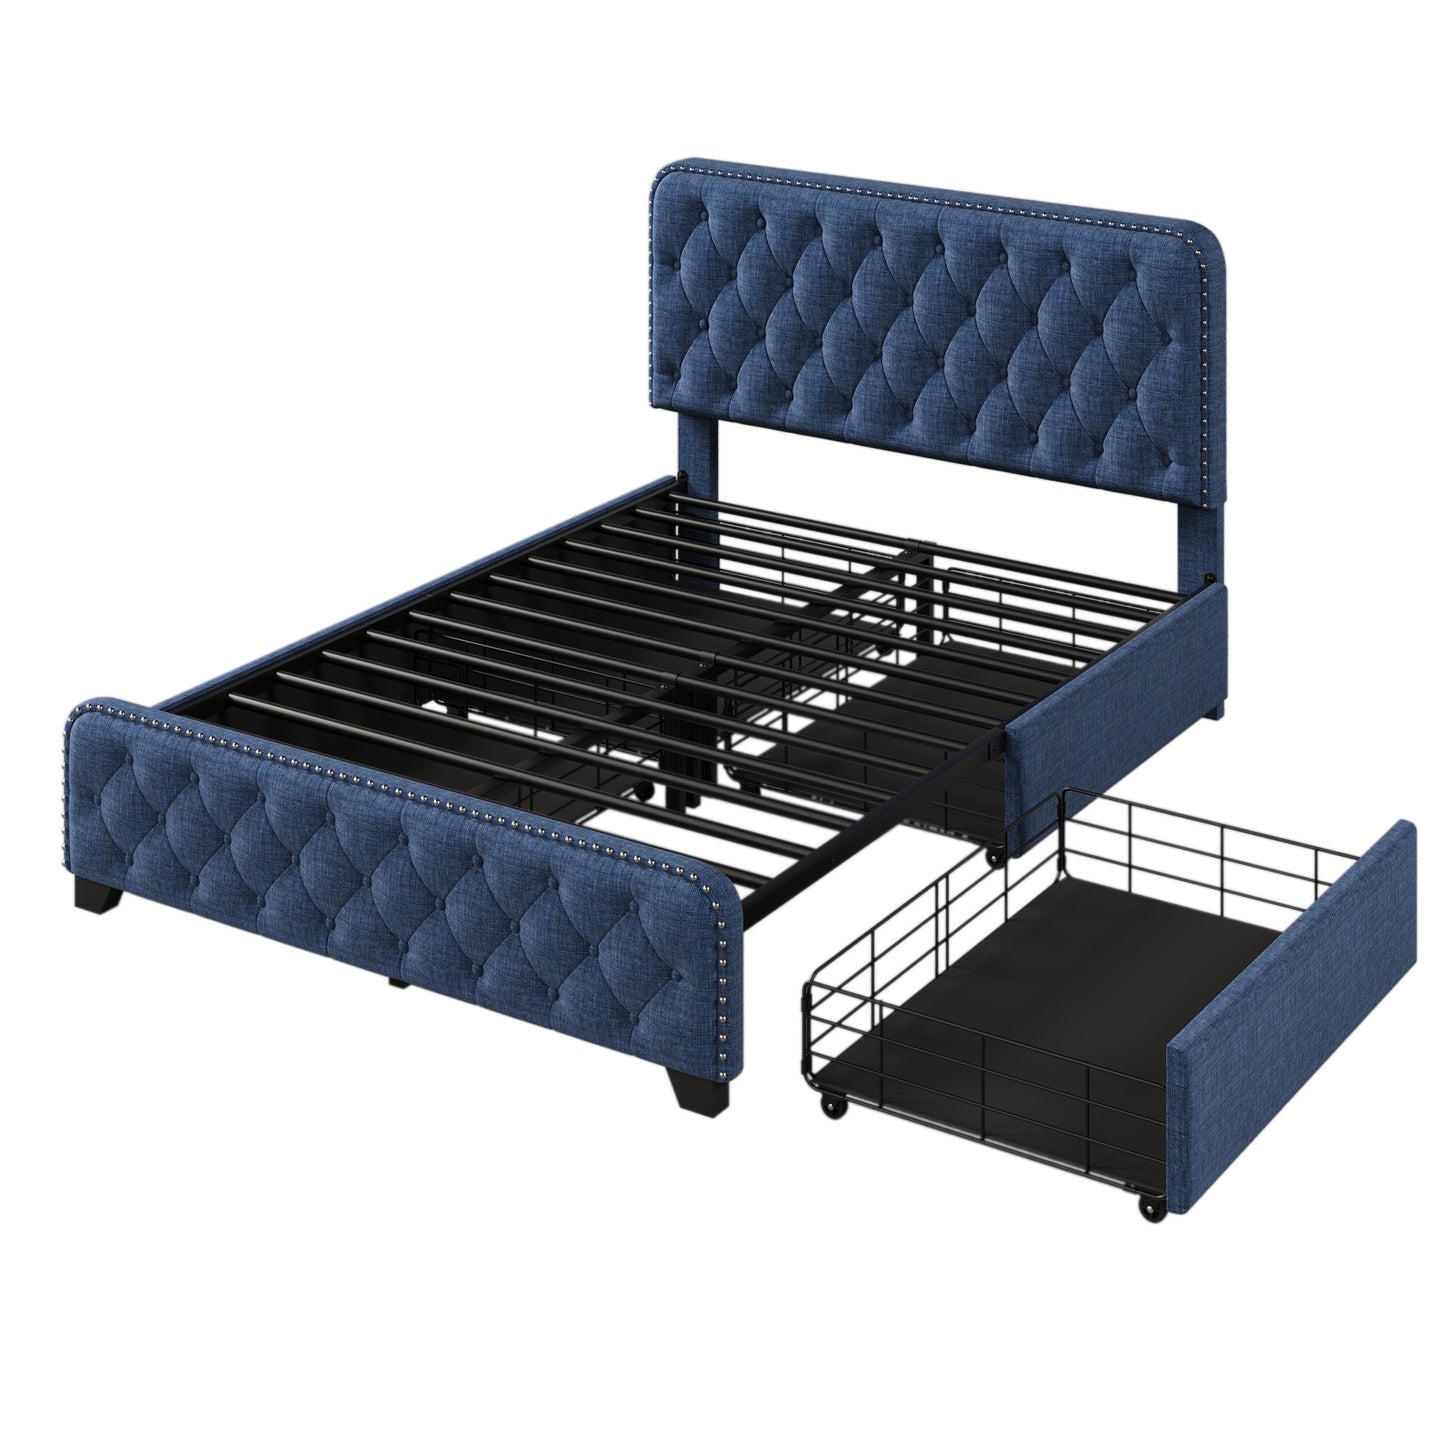 upholstered platform bed frame with four drawers, blue